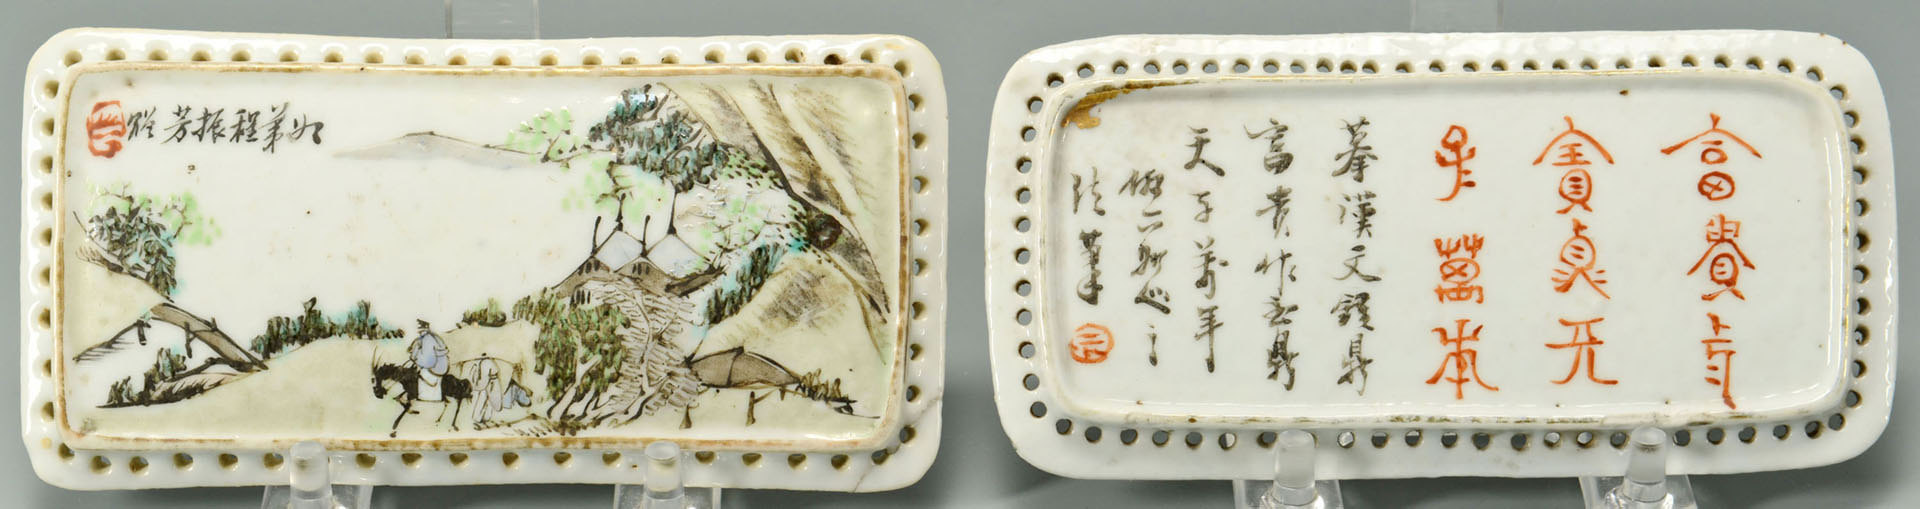 Lot 450: 6 pcs Chinese porcelain desk or scholar's objects